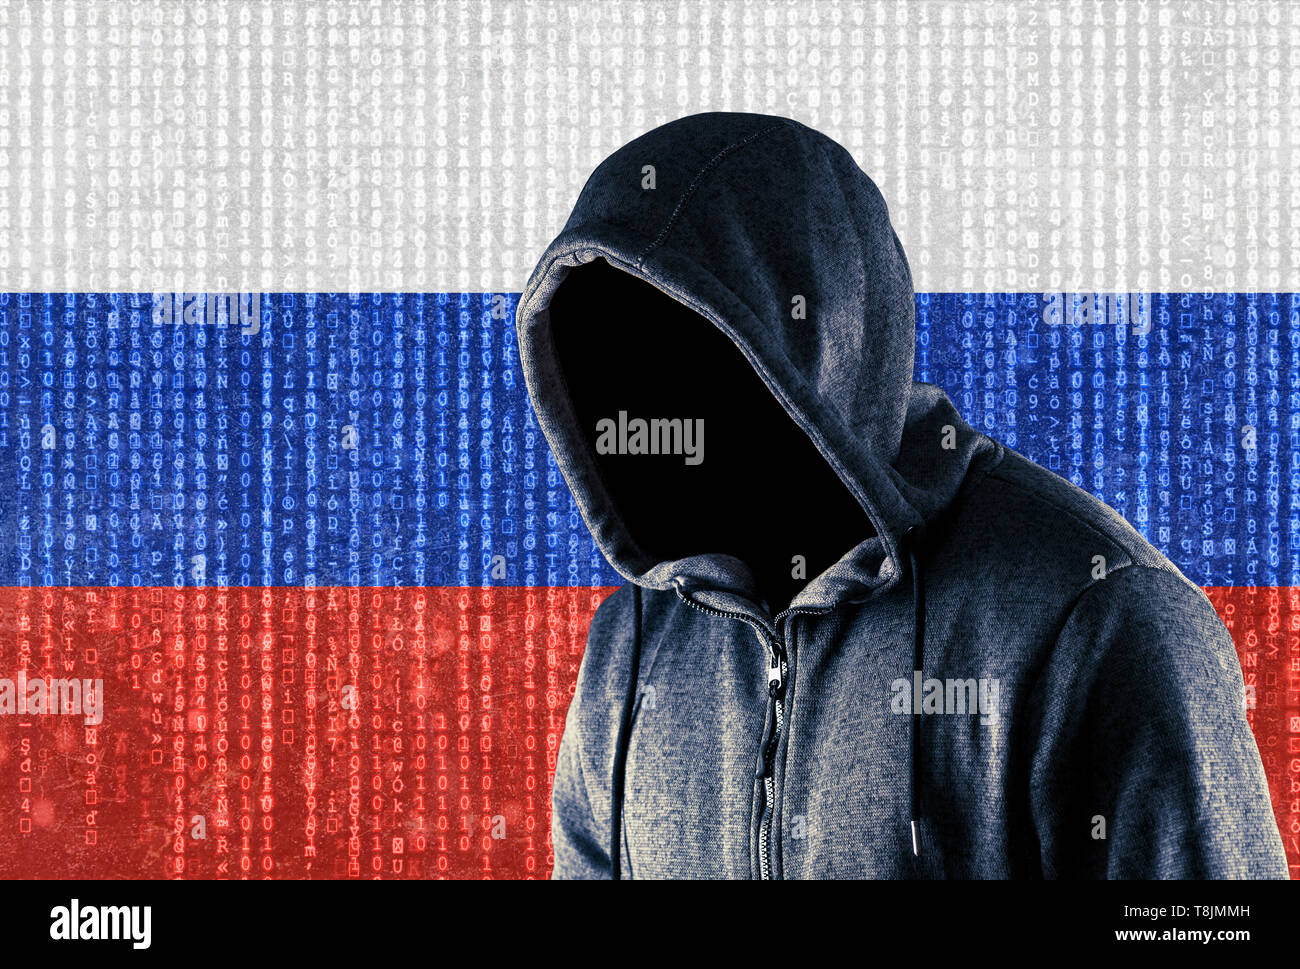 Russian hooded computer hacker Stock Photo